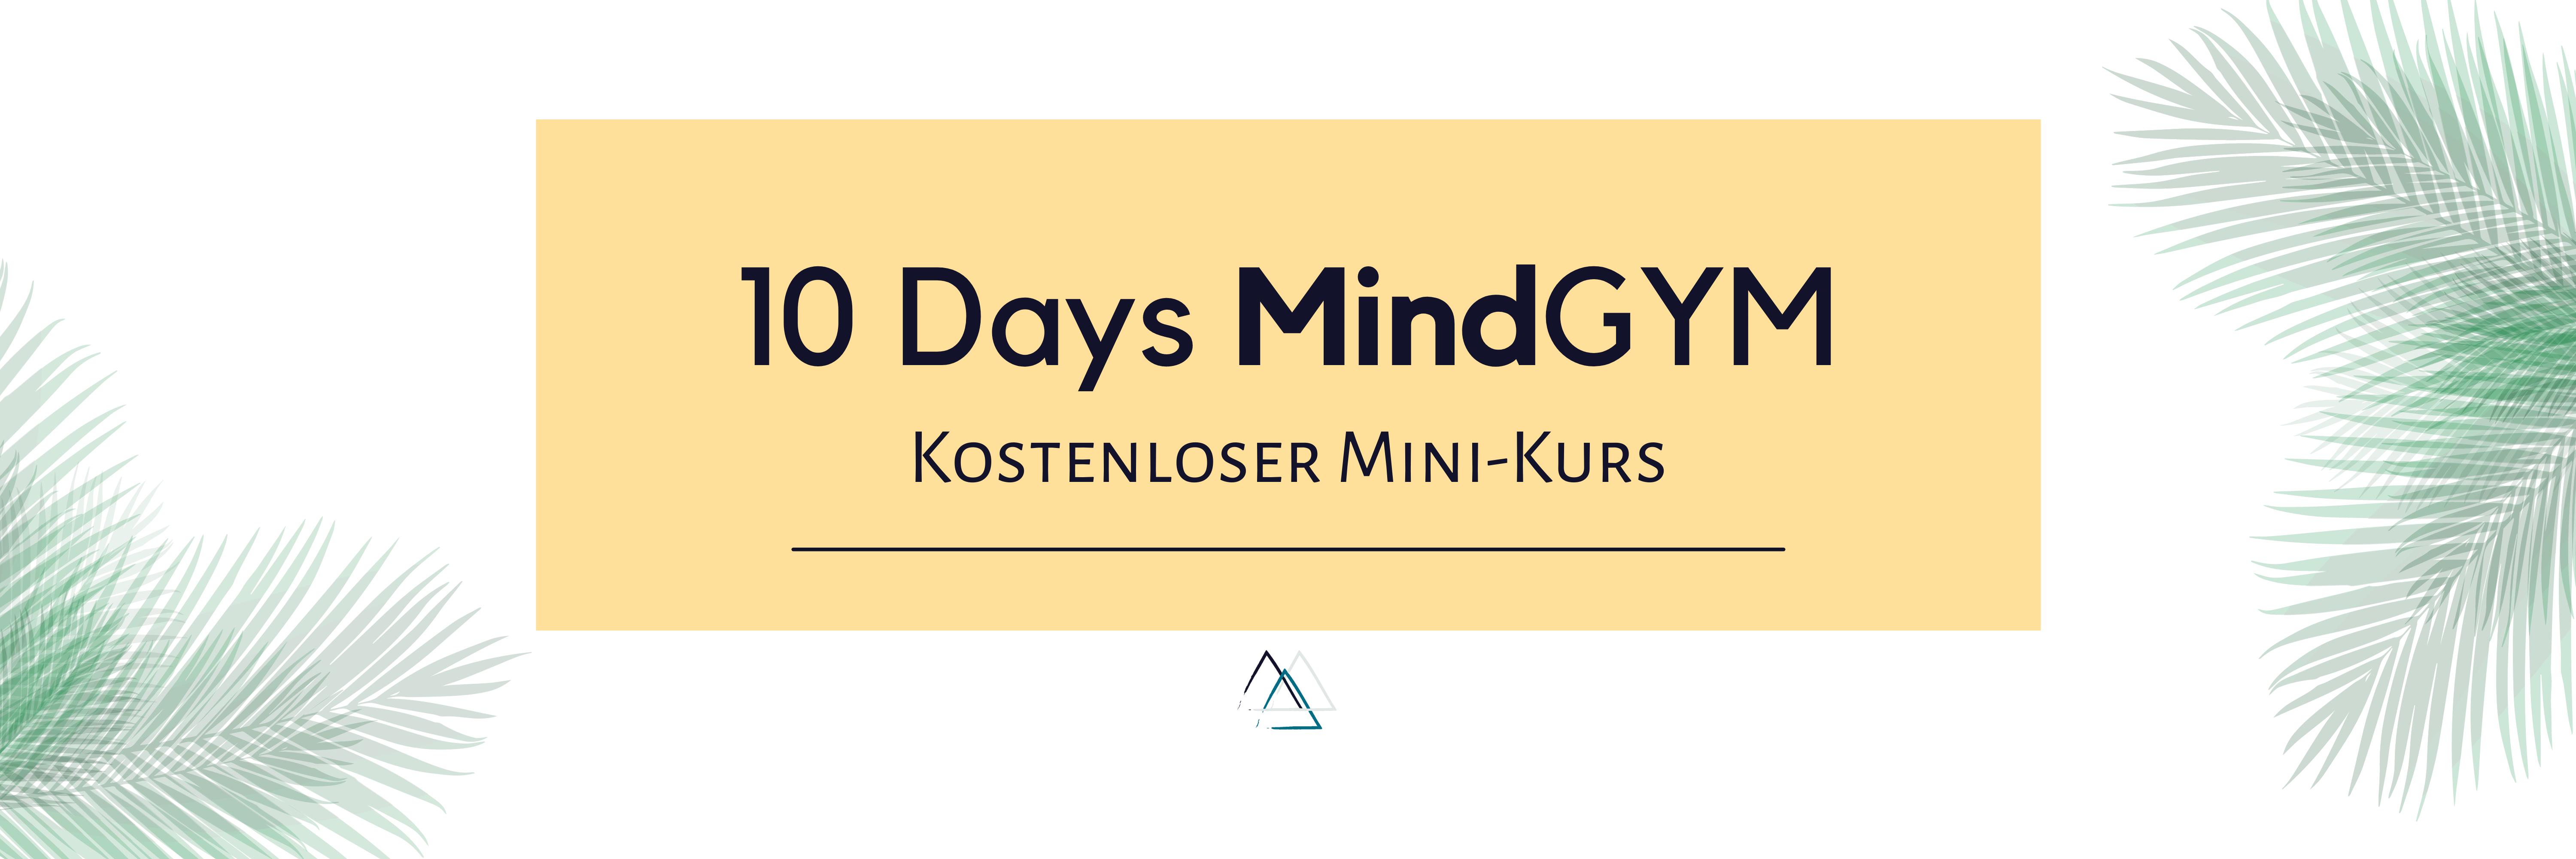 10 Days MindGYM Mini-Kurs